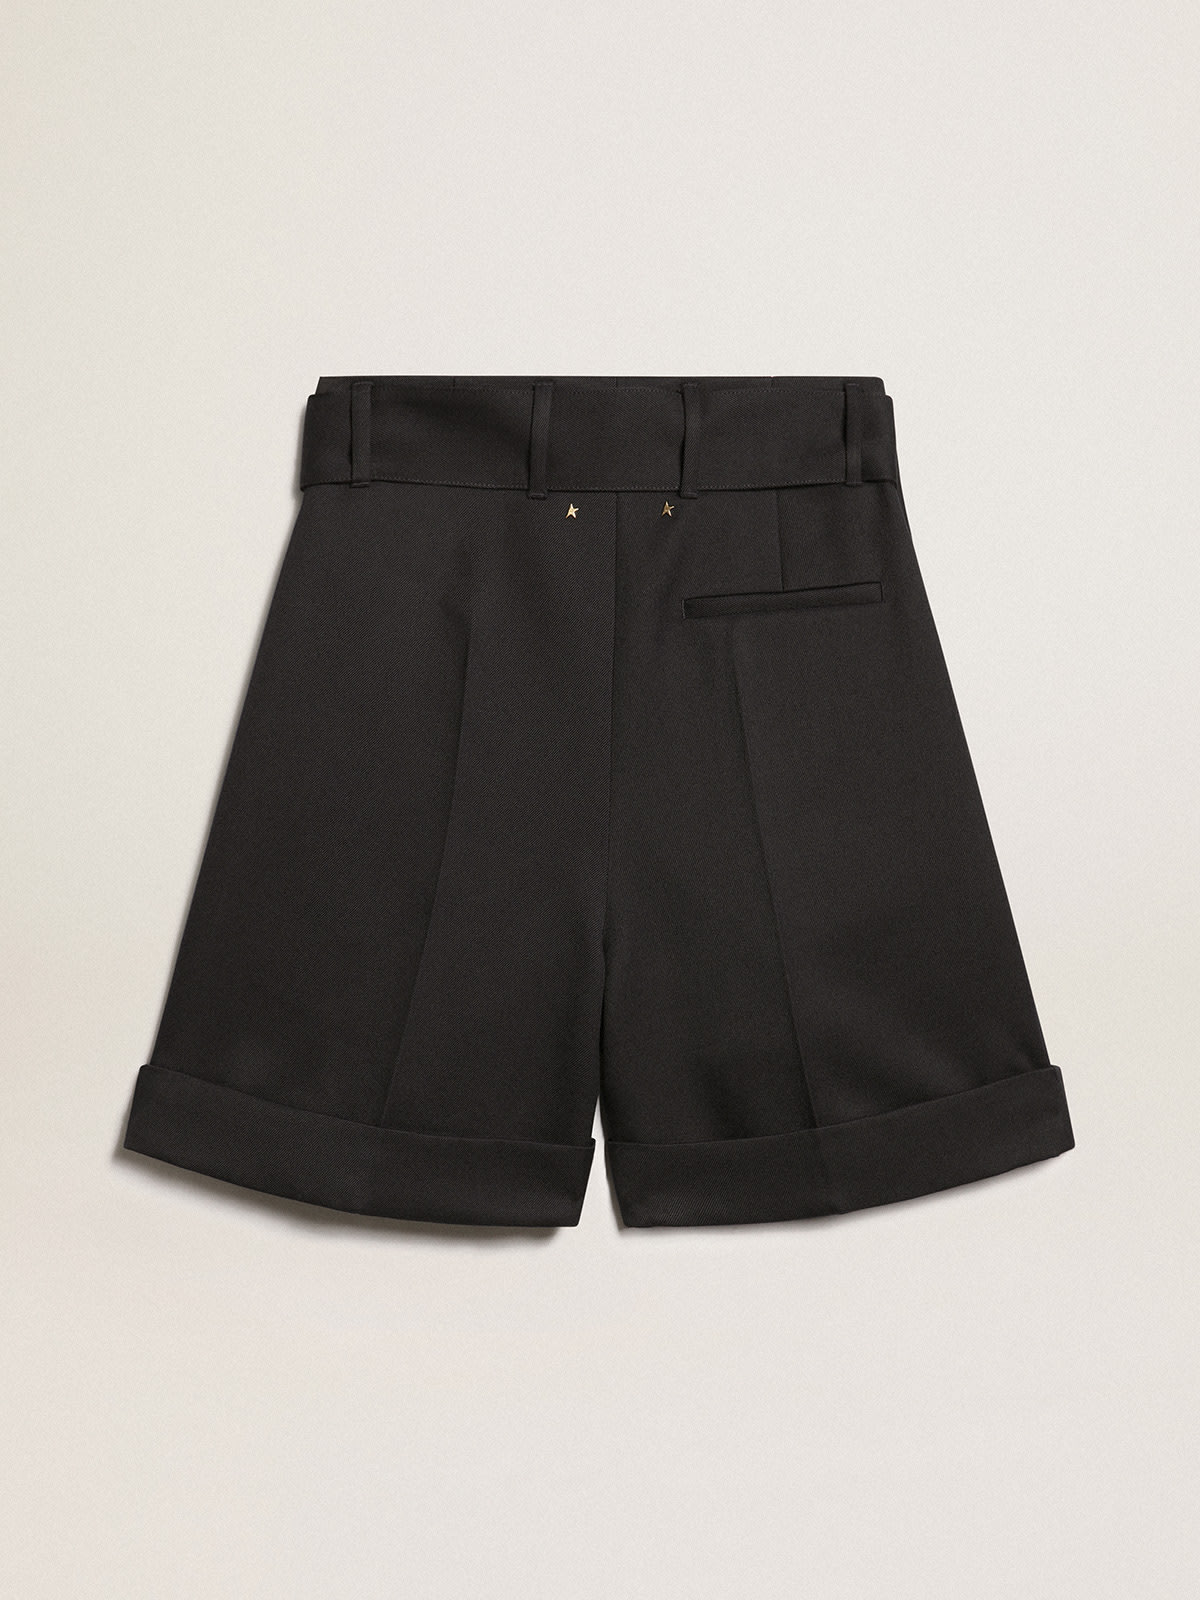 Golden Goose - Women's shorts in black wool gabardine with waist belt in 